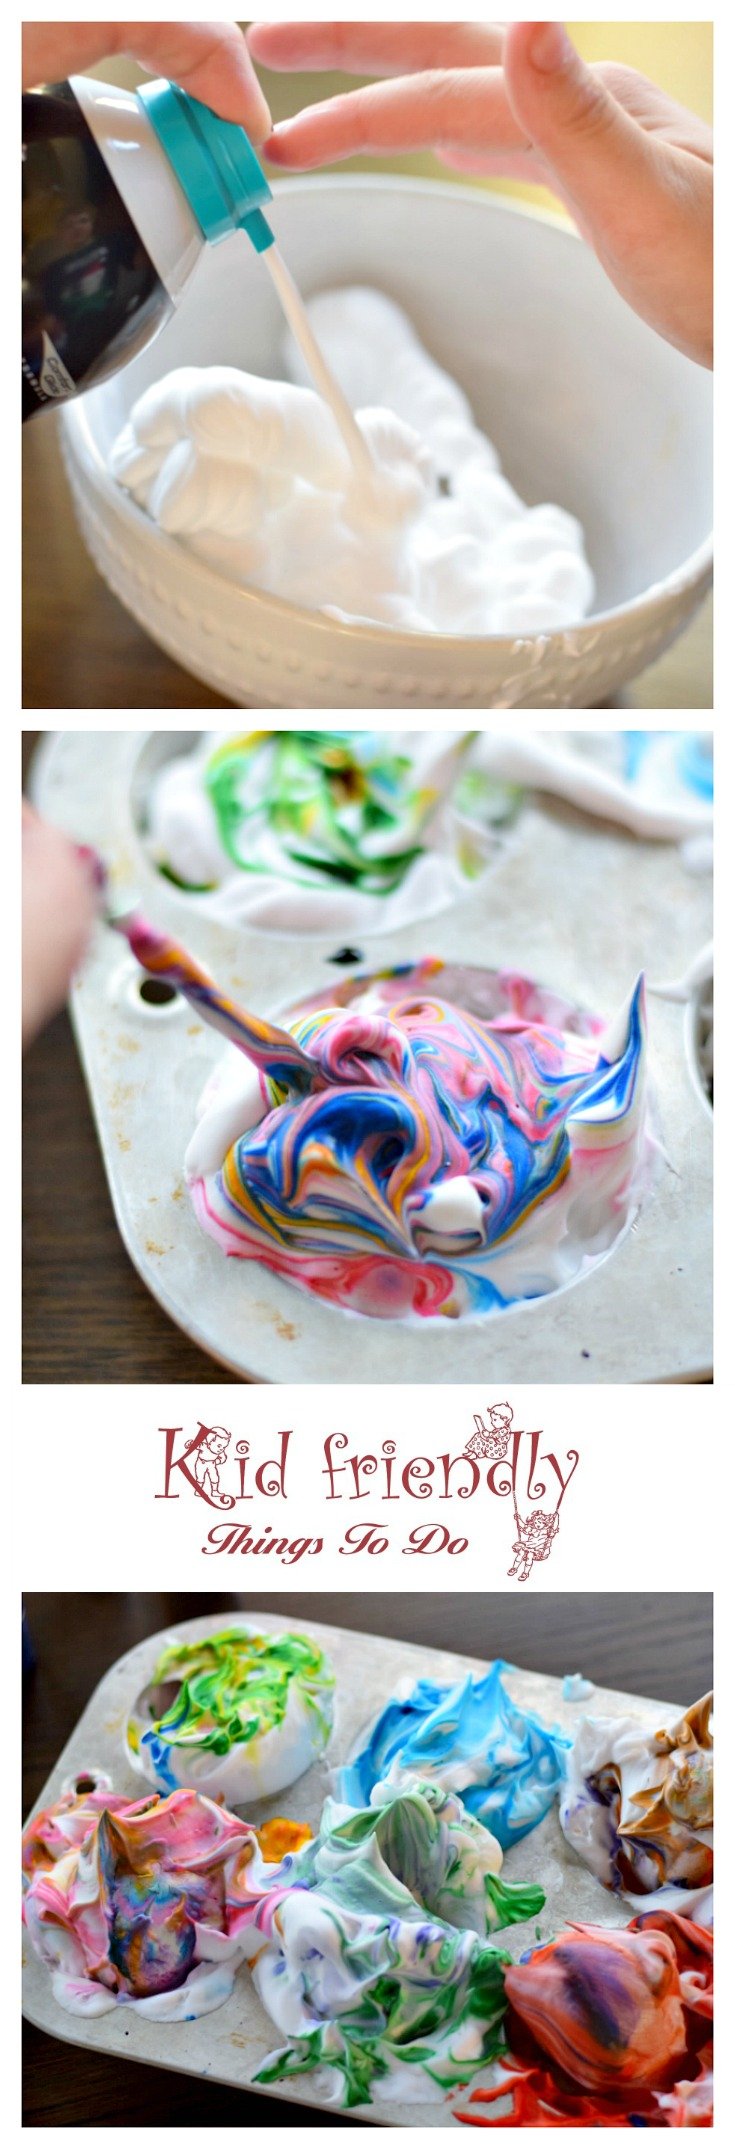 How To Dye Easter Eggs With Shaving Cream (or Whipped Cream) - What a fun way to dye Easter Eggs with kids. Love the different swirl patterns - www.kidfriendlythingstodo.com